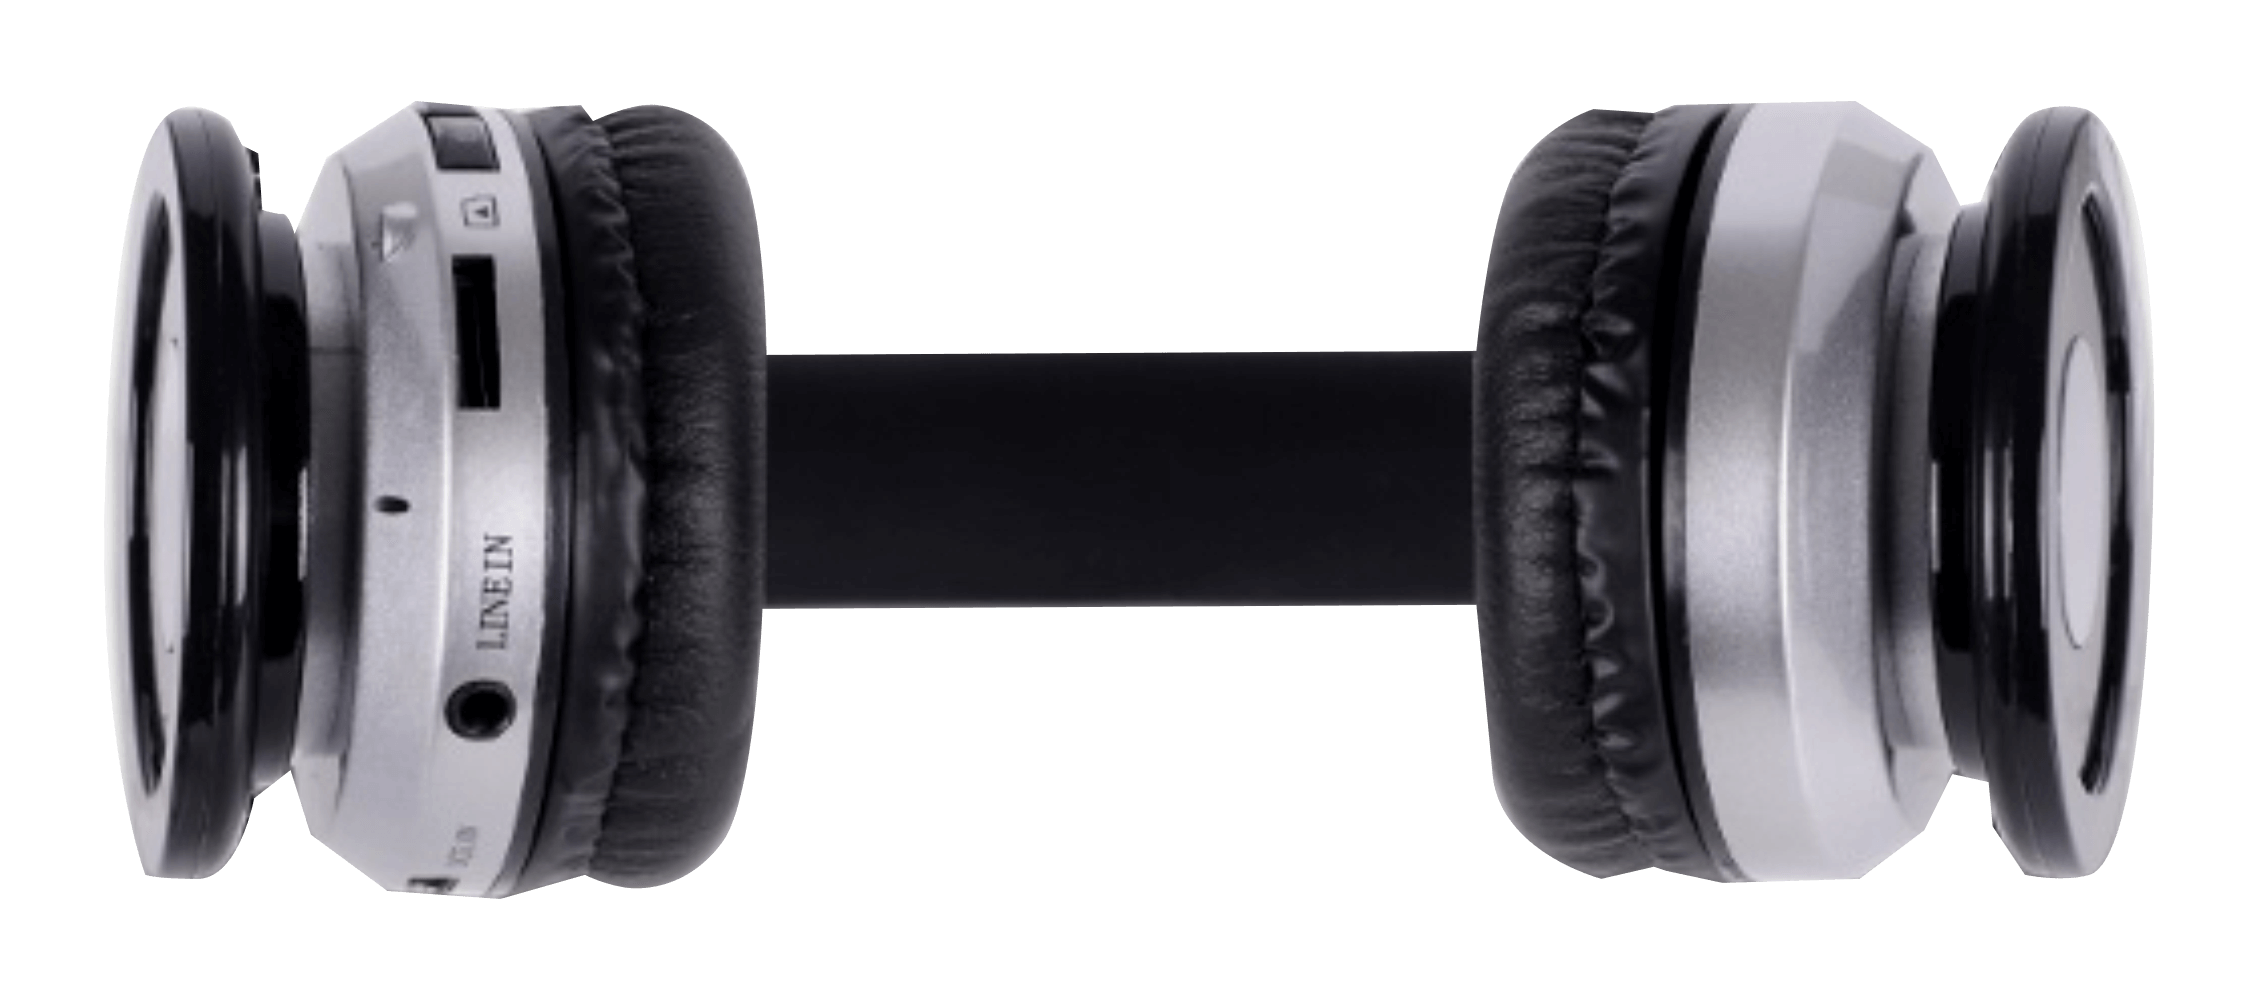 LG K11 (K425) bluetooth fejhallgató Rebeltec Crystal fekete